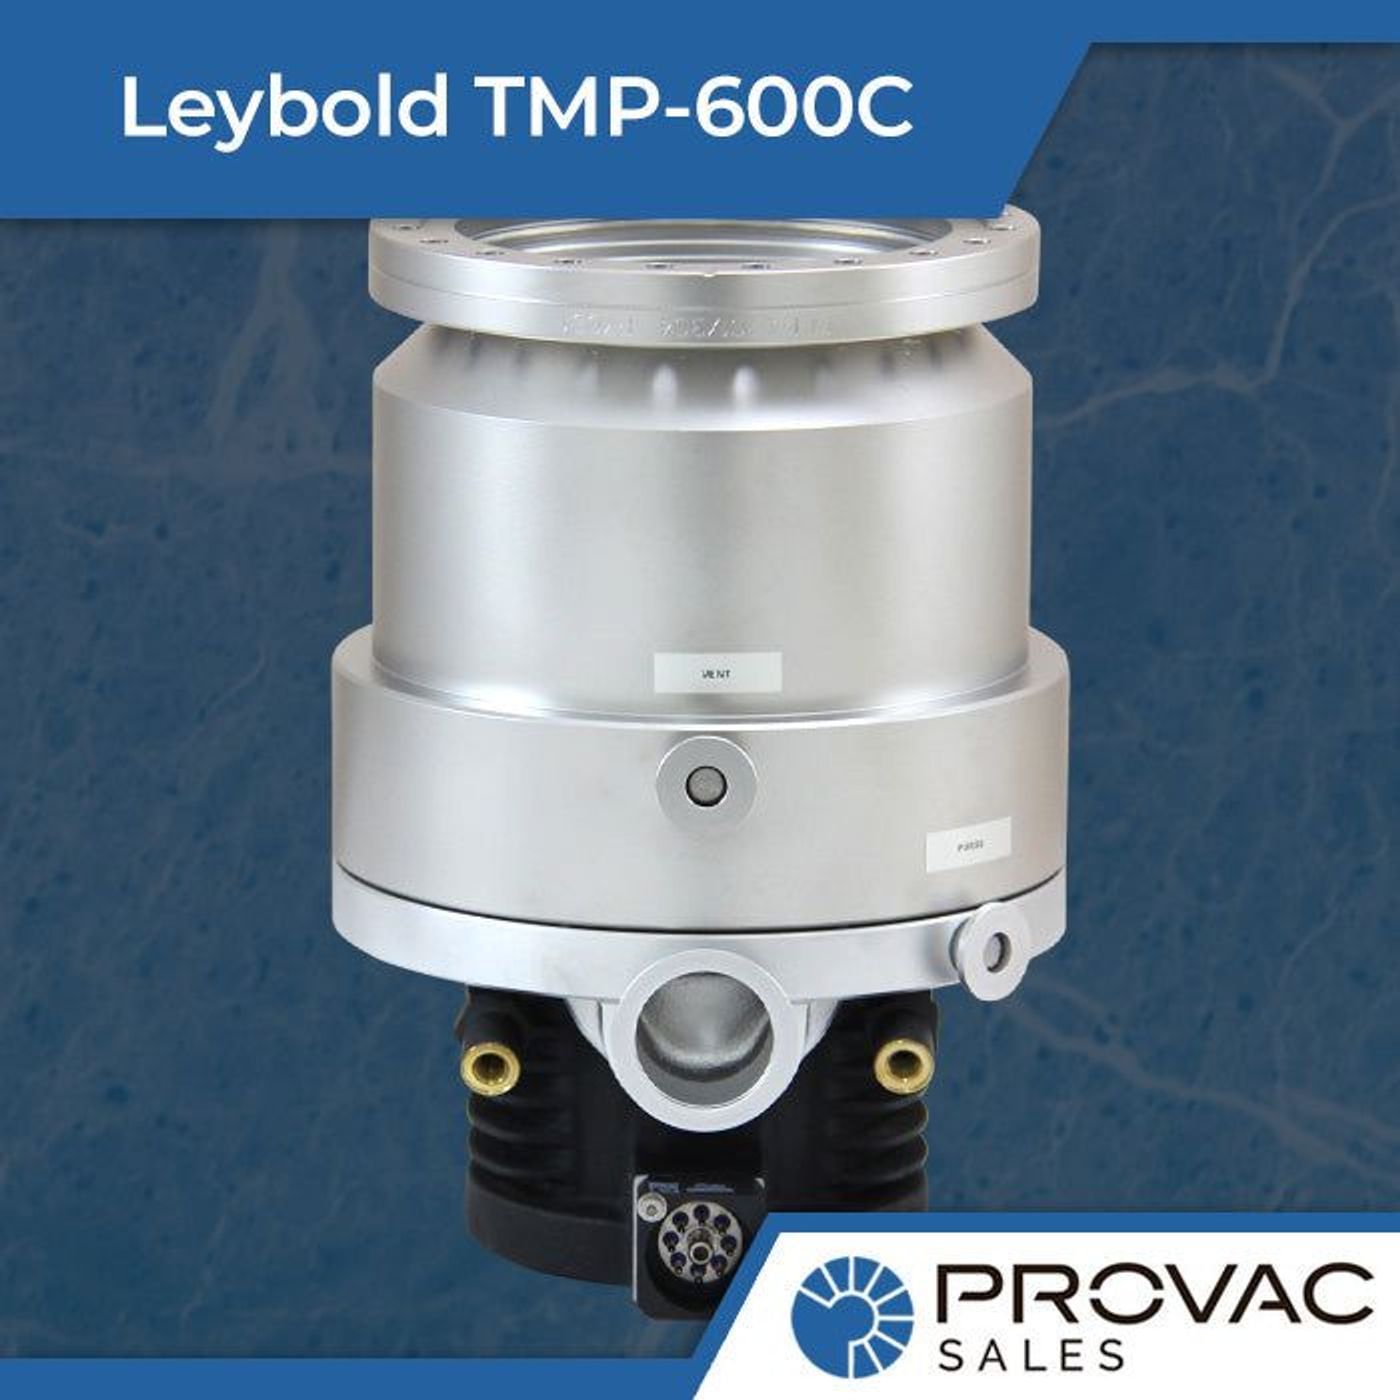 Leybold TMP-600C Turbomolecular Pump